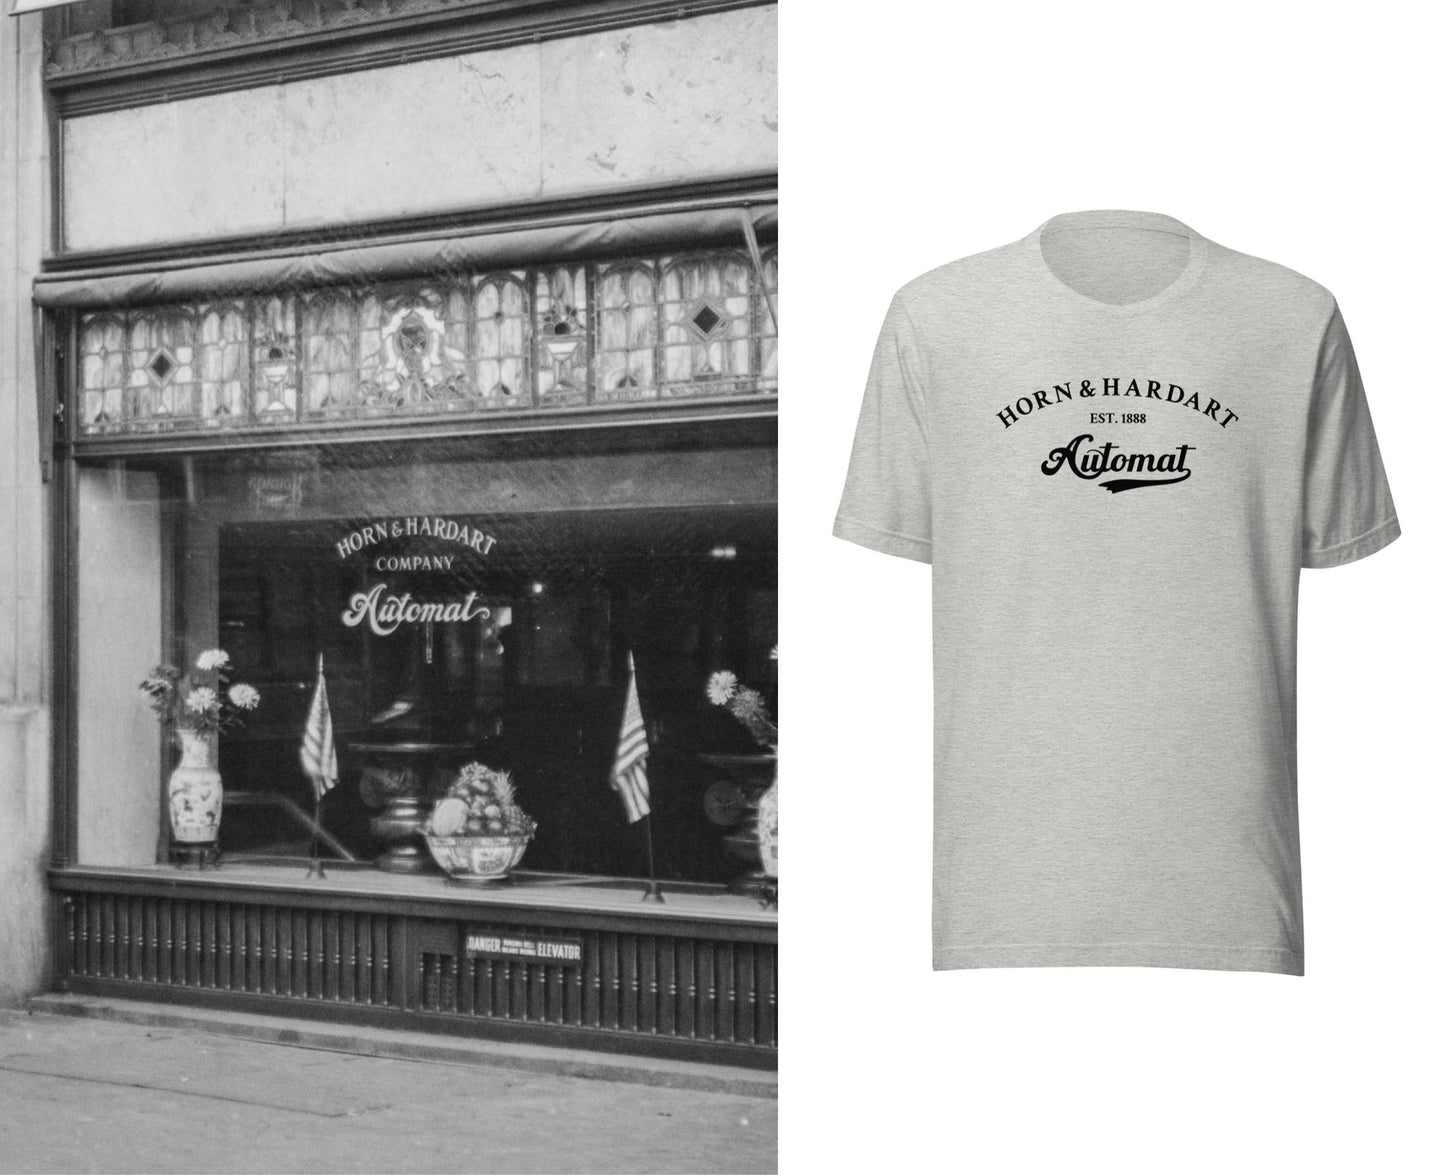 Horn & Hardart Vintage Automat T-Shirt